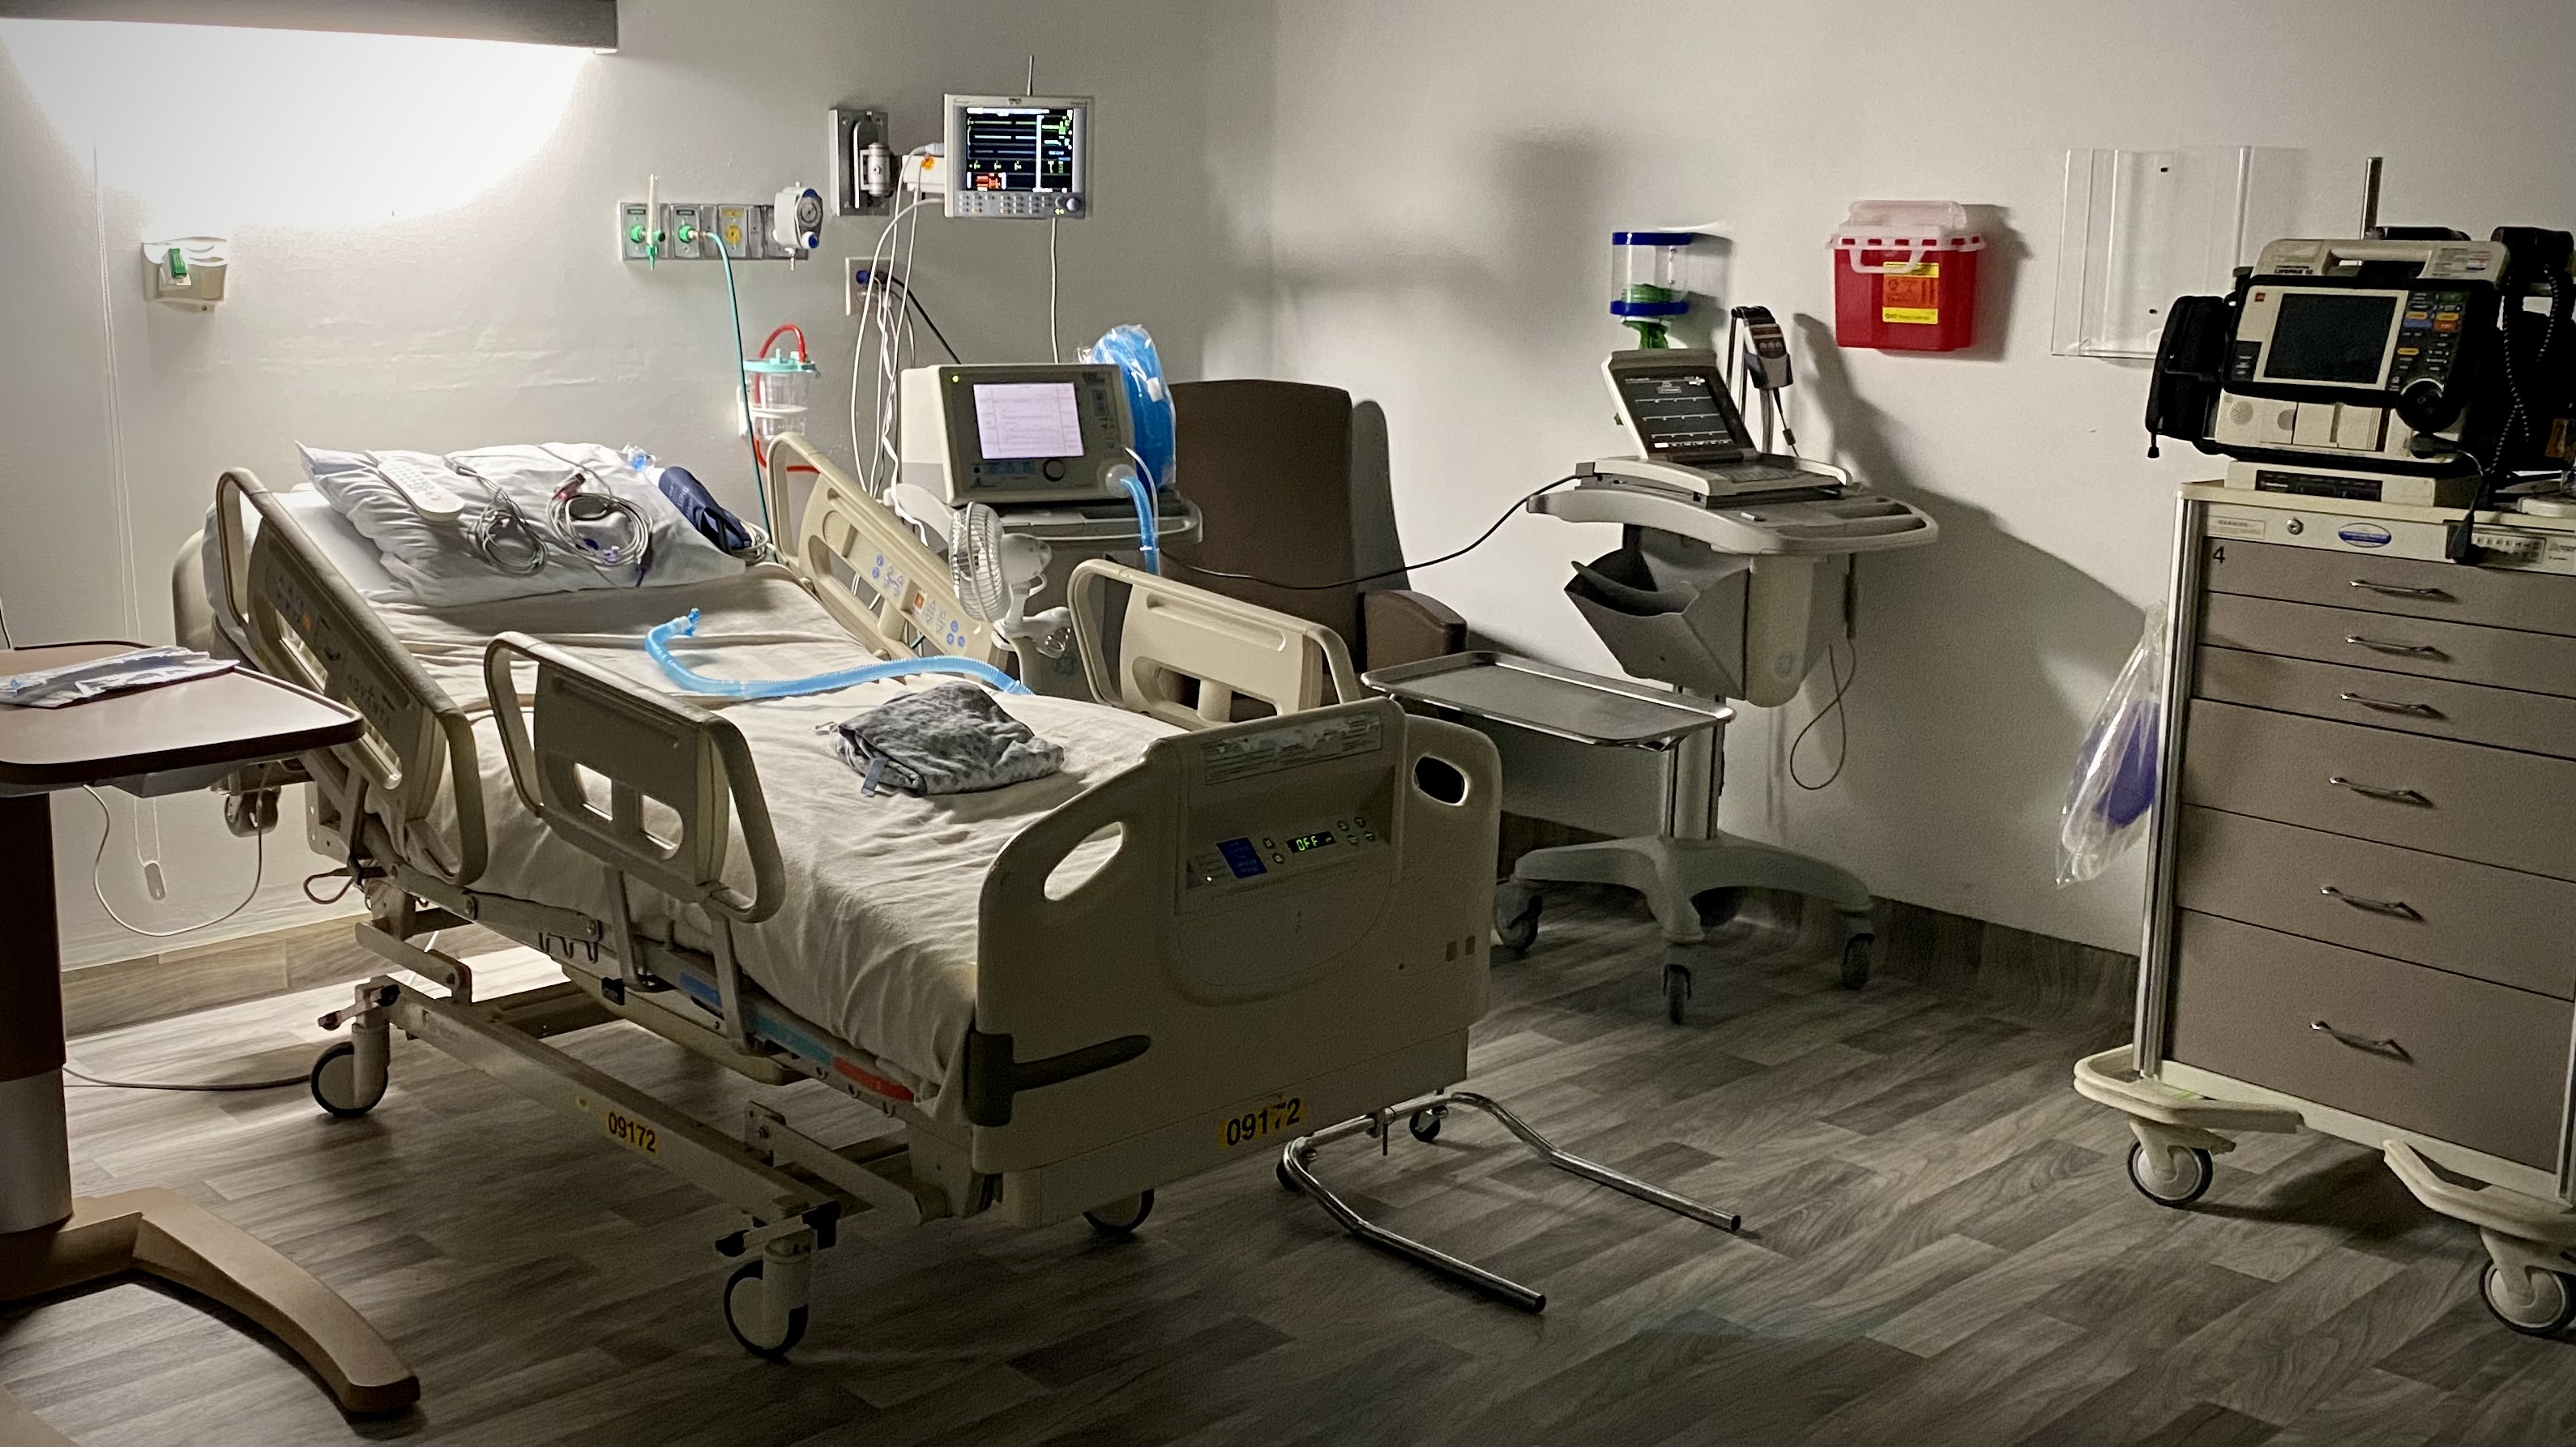 The ICU room